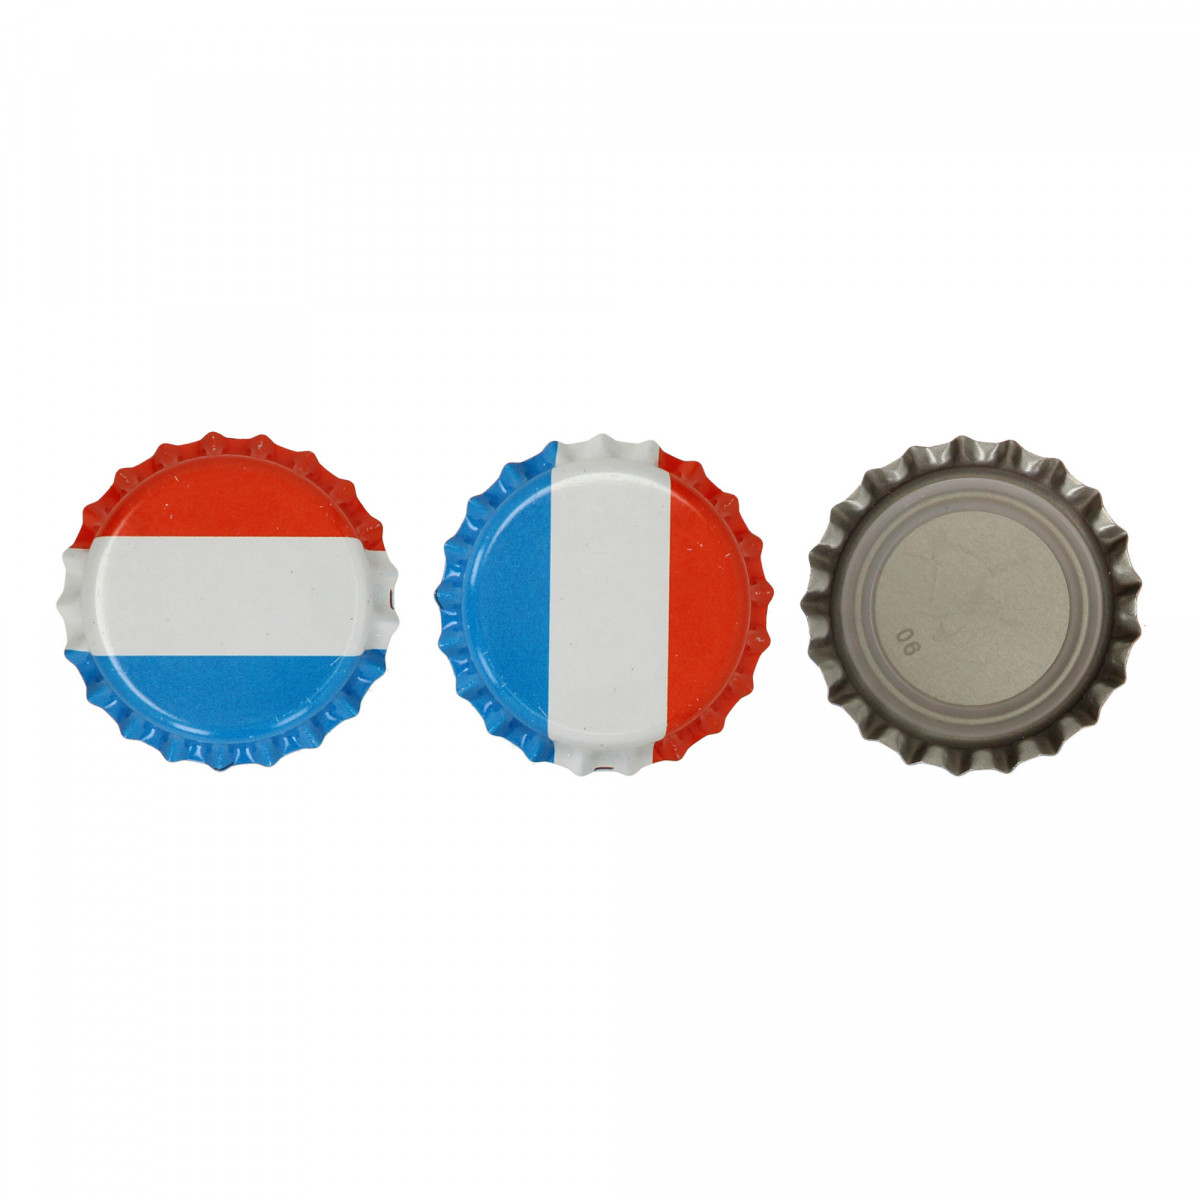 Crown corks 26 mm - oxygen scavenging - French/Dutch flag  - 100 pcs